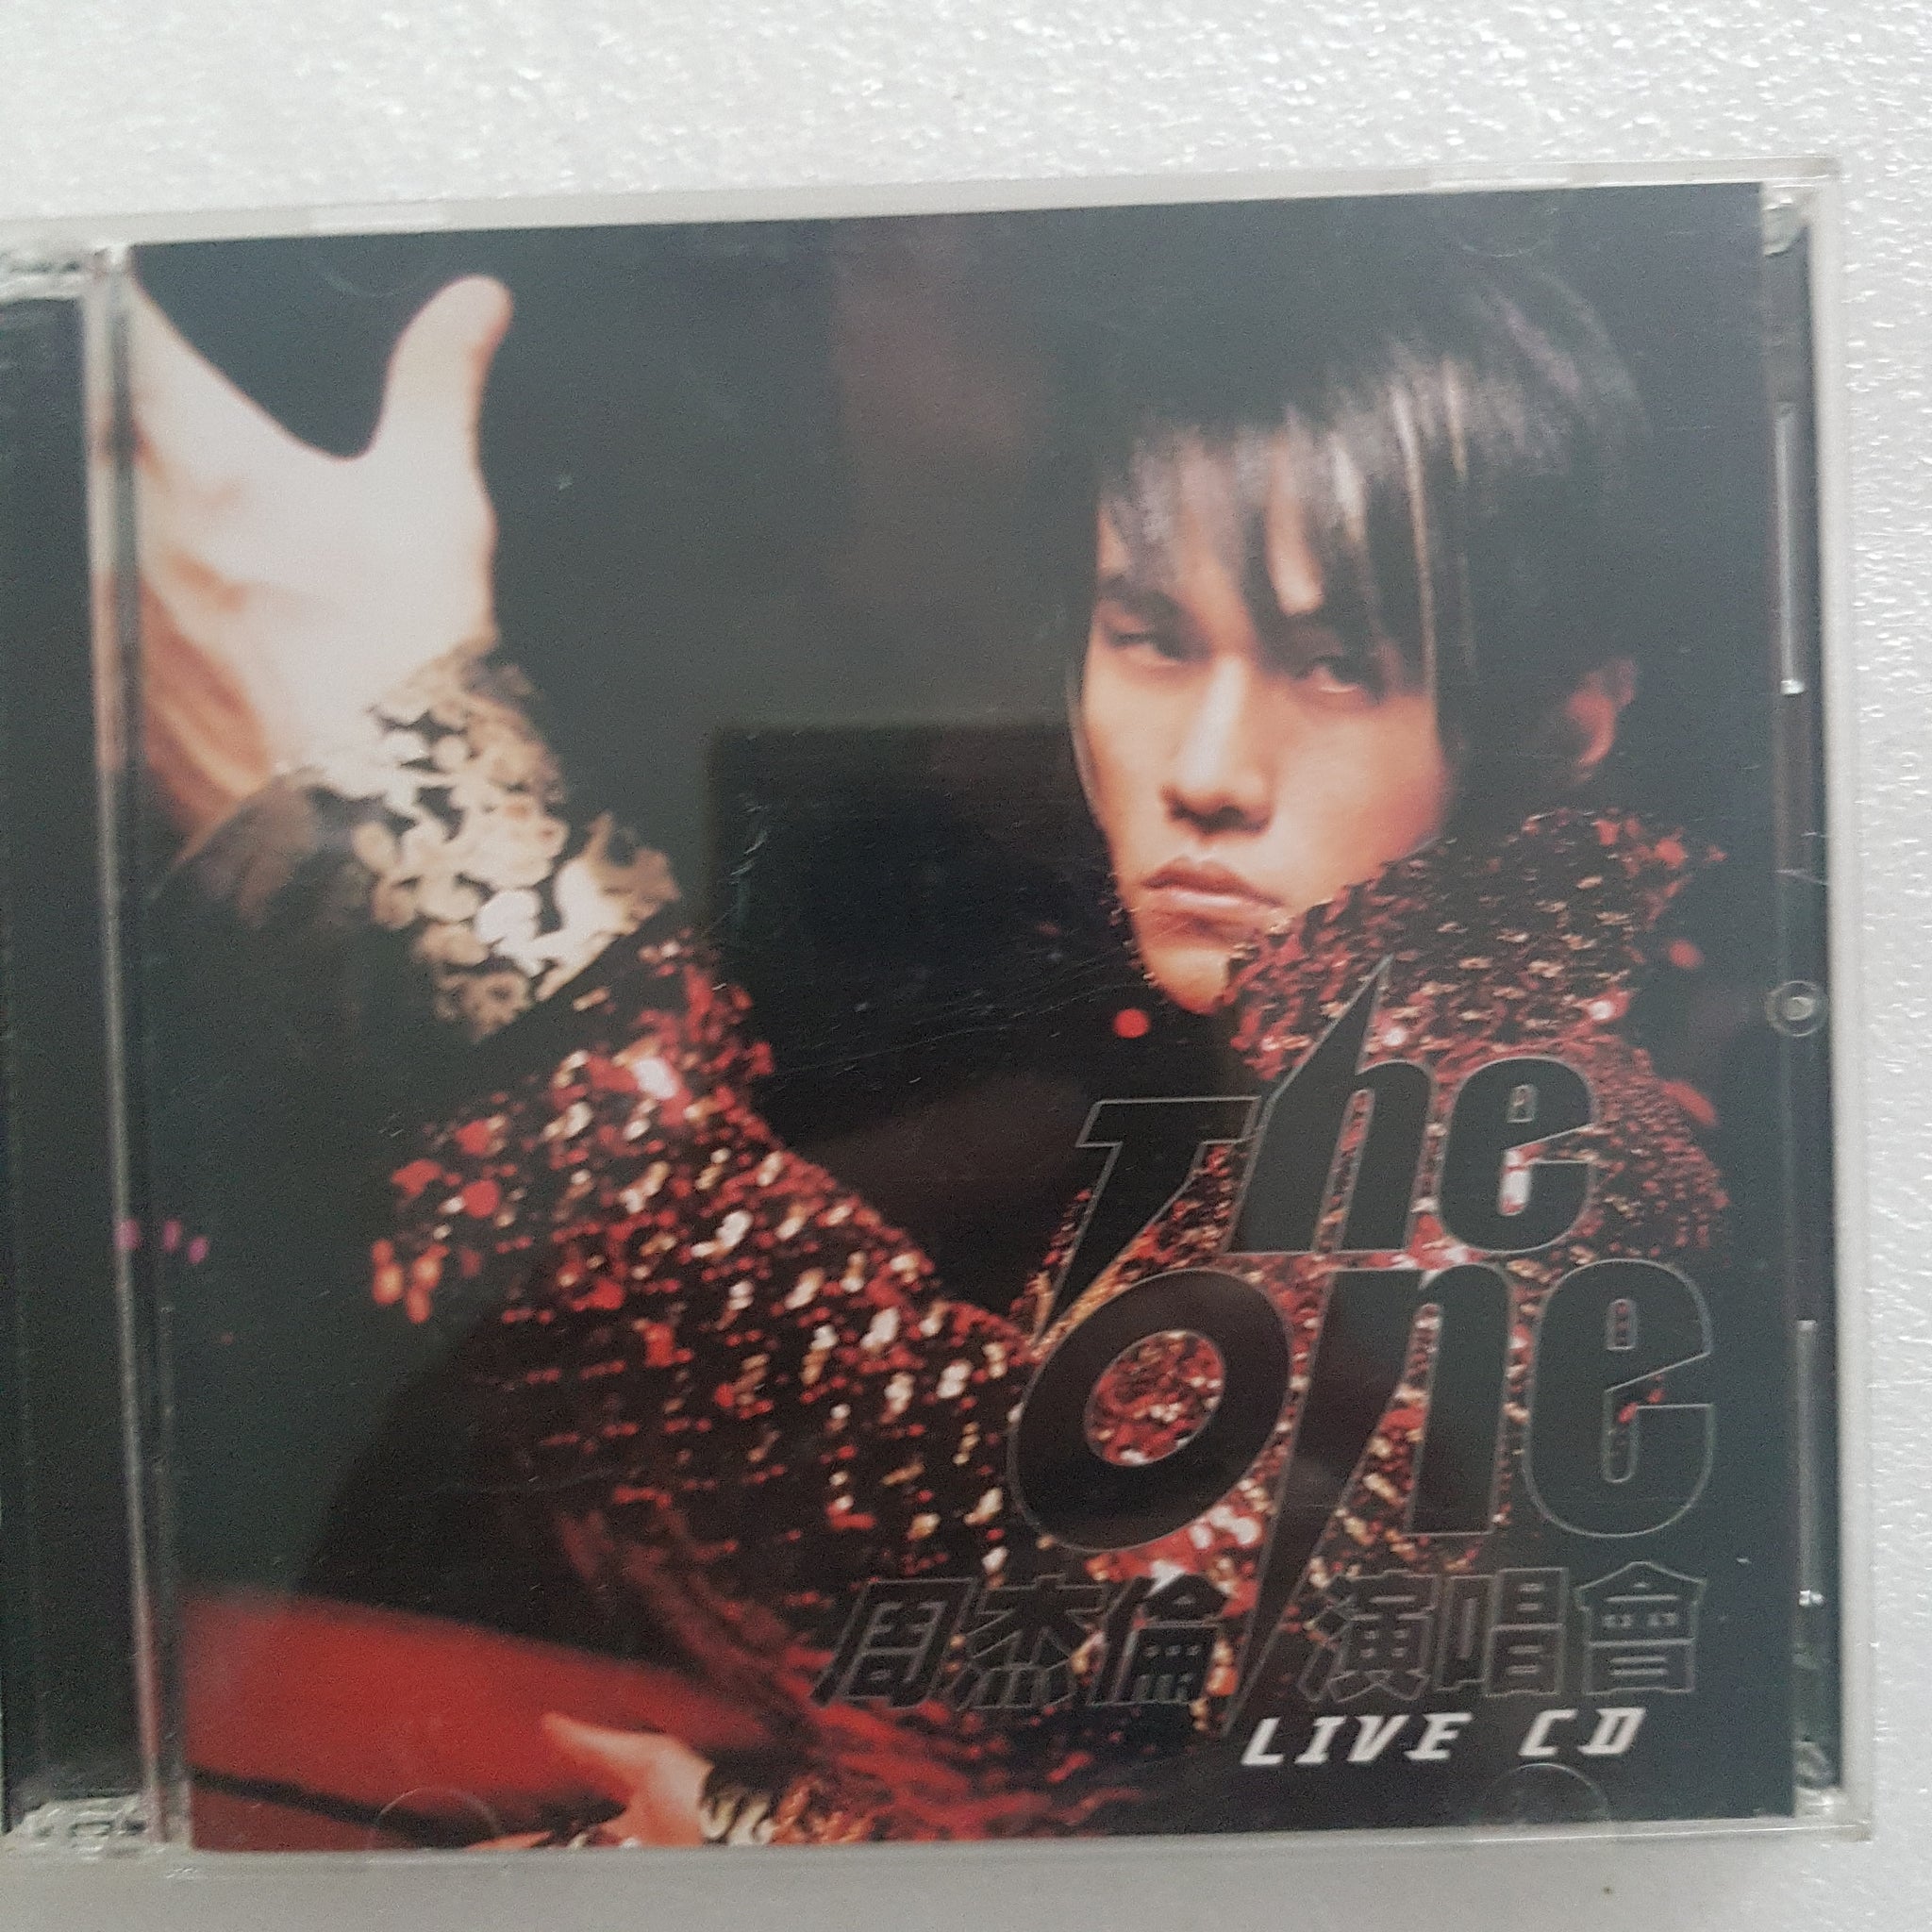 2cd 周杰伦演唱会the one live cd